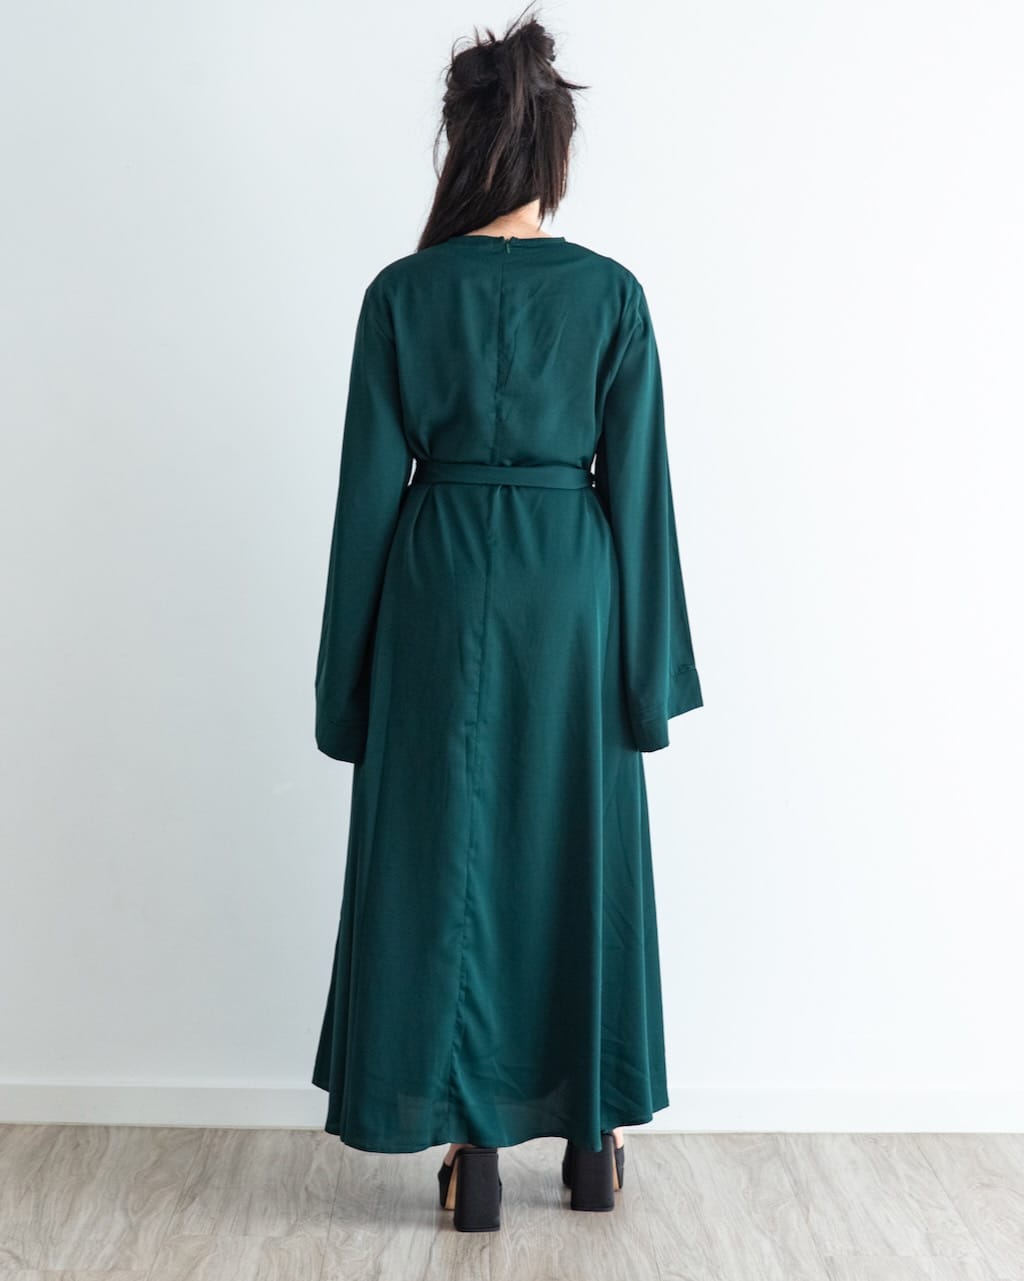 Khatijah Emerald Green Abaya